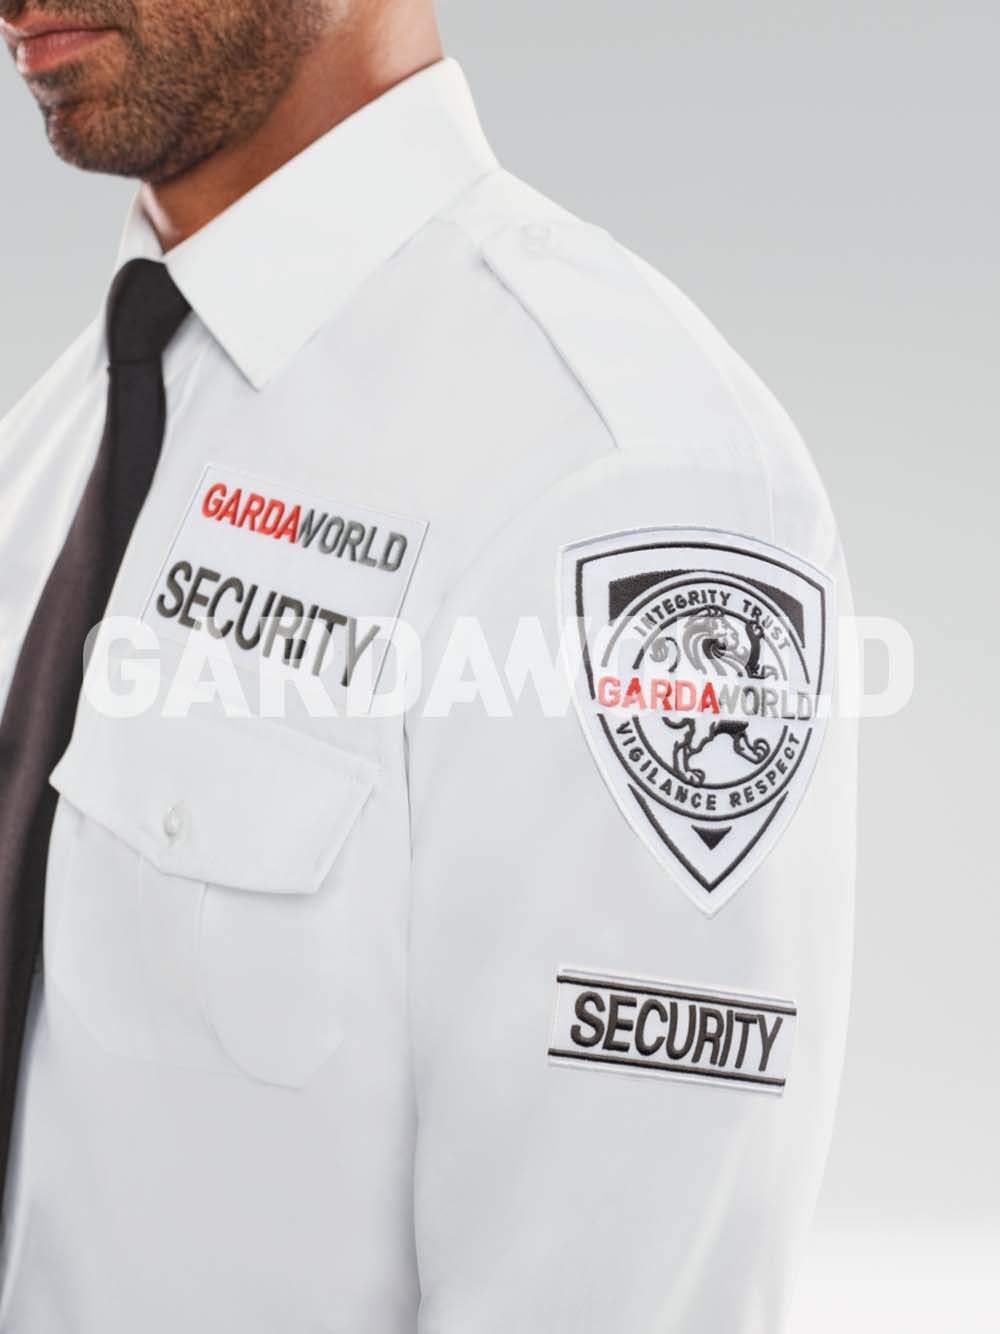 Security Services Agent Uniform, GardaWorld Crest